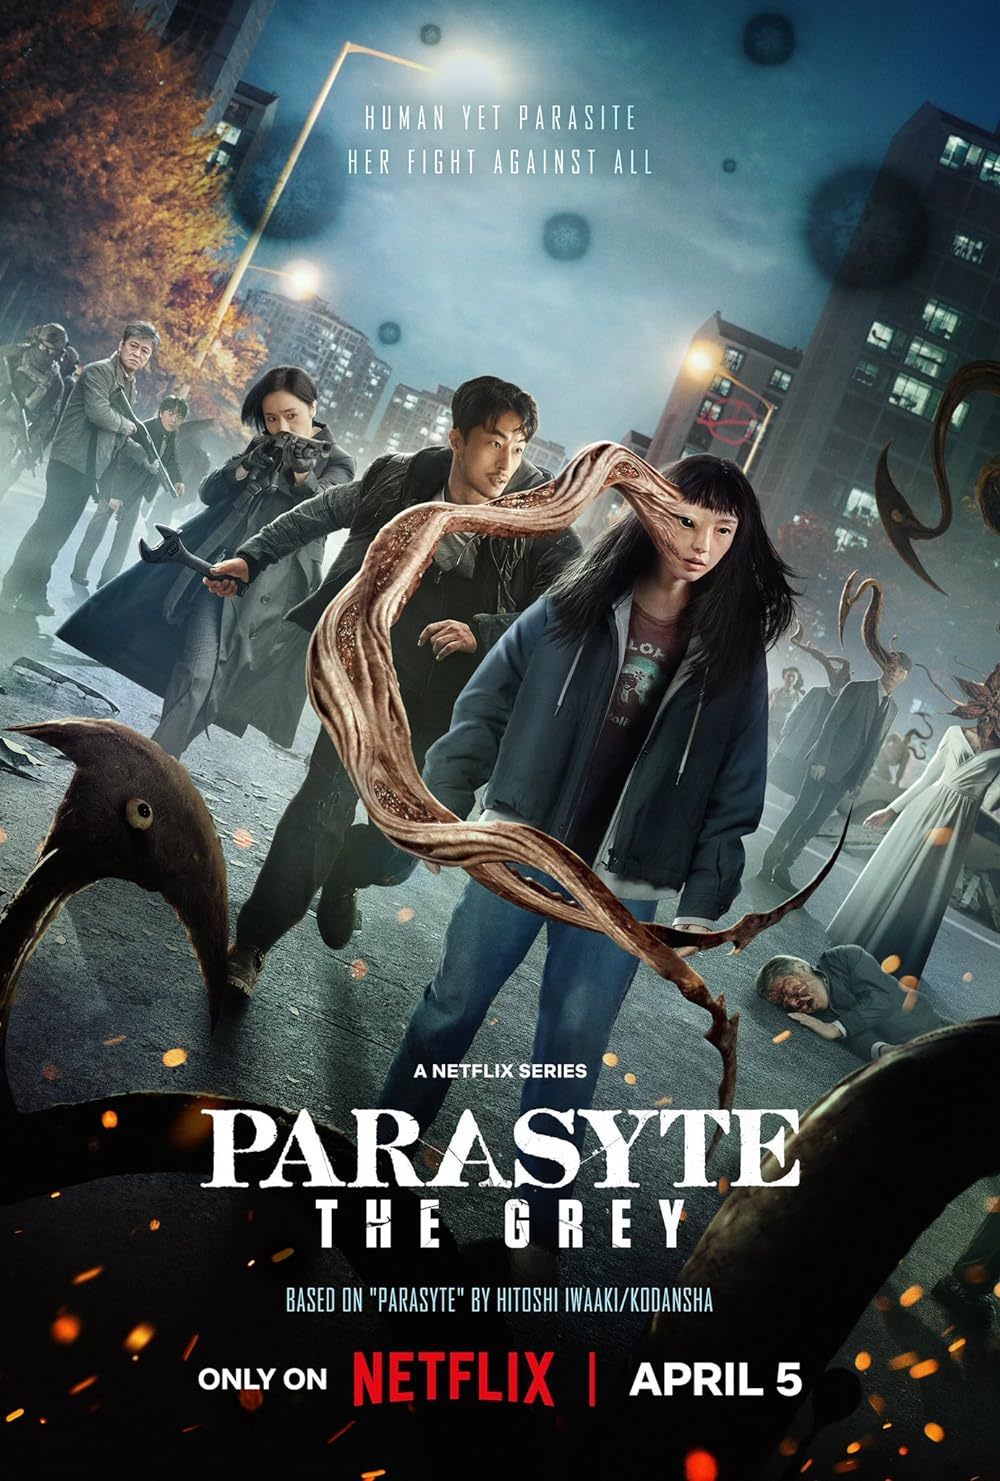 Phim Parasyte: The Grey soán ngôi top 1 Netflix của Queen of Tears